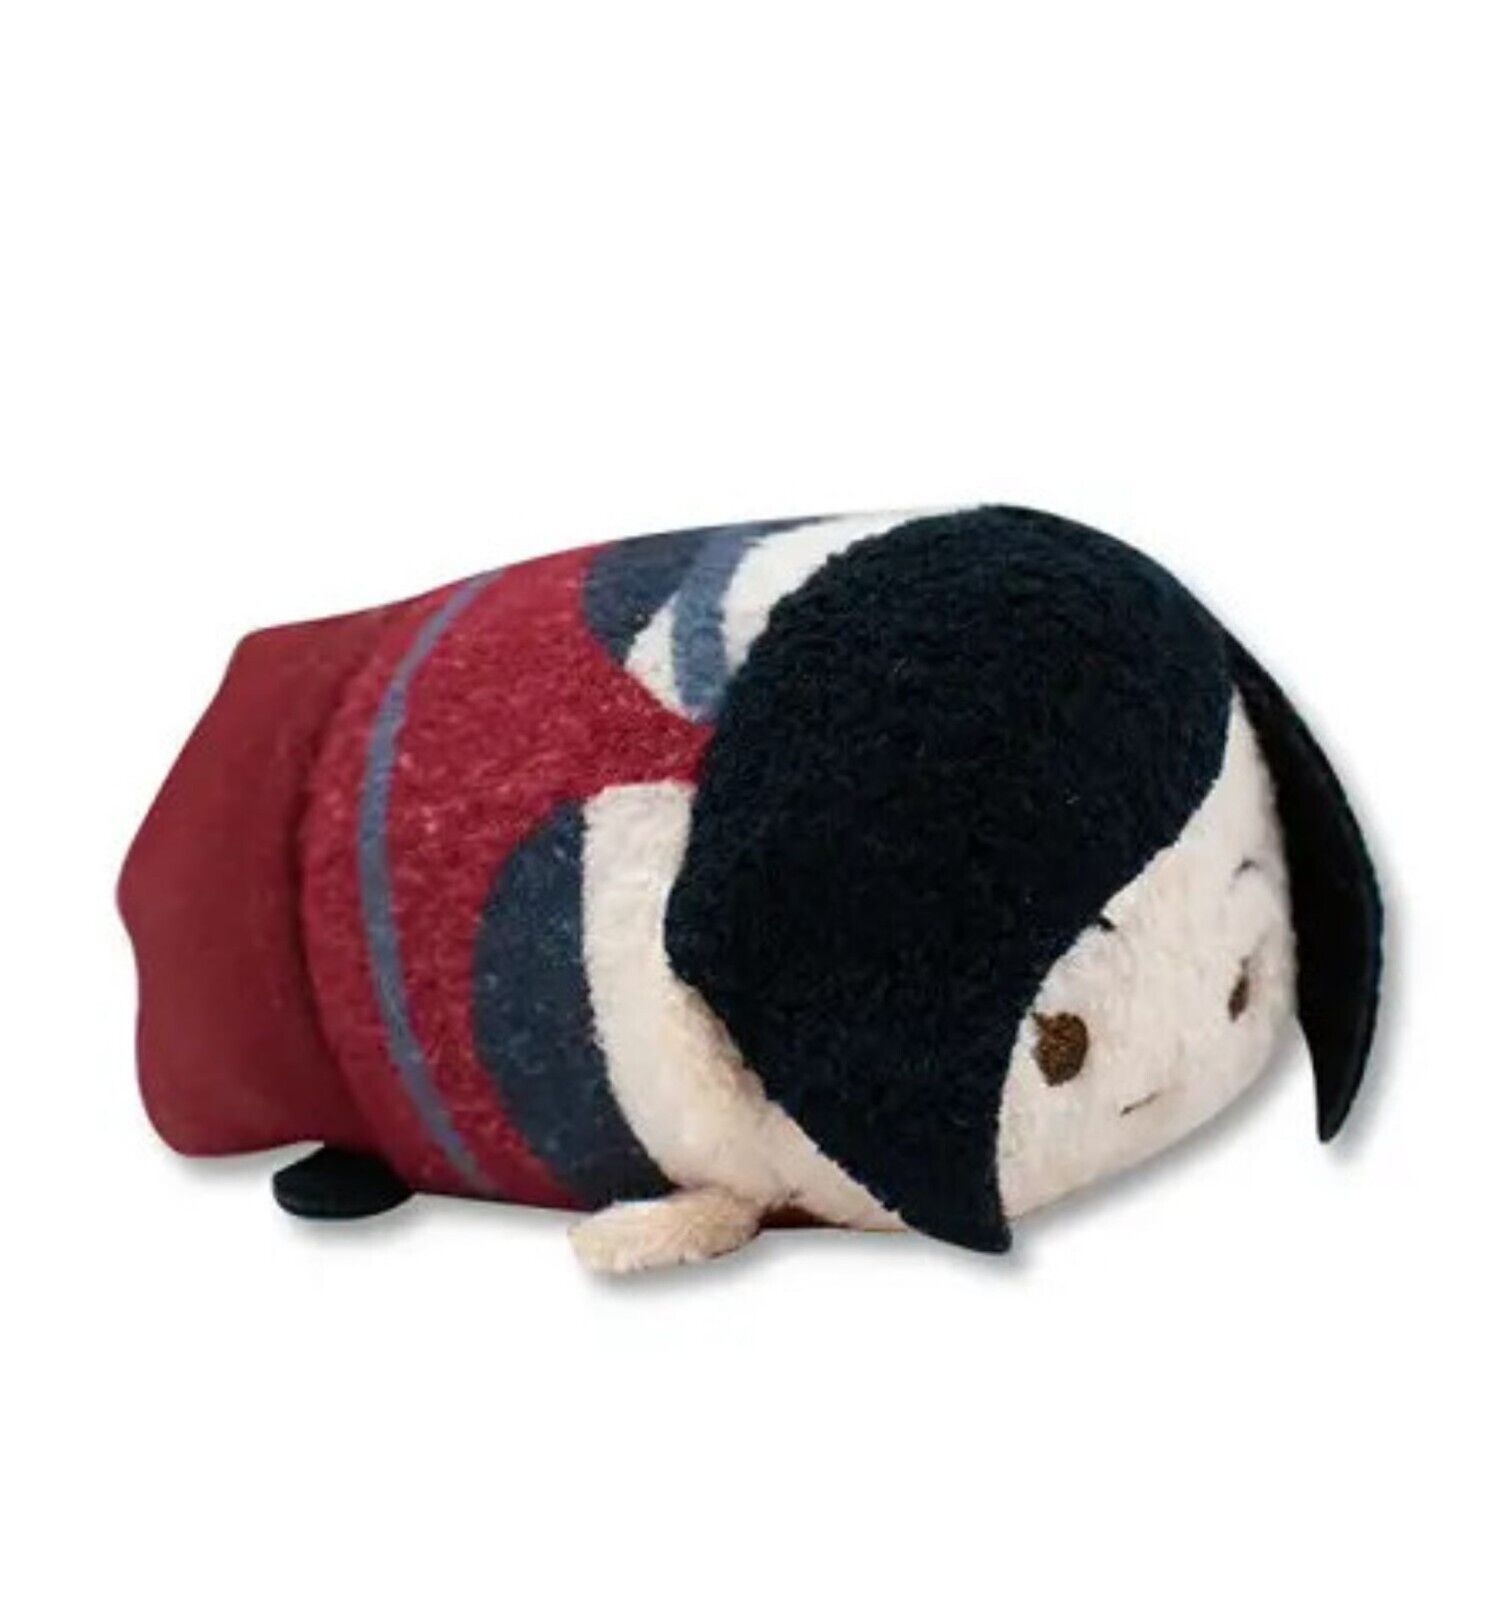 CAPCOM Capukoron mascot plush Ada Wong resident evil Stuffed toy Japan